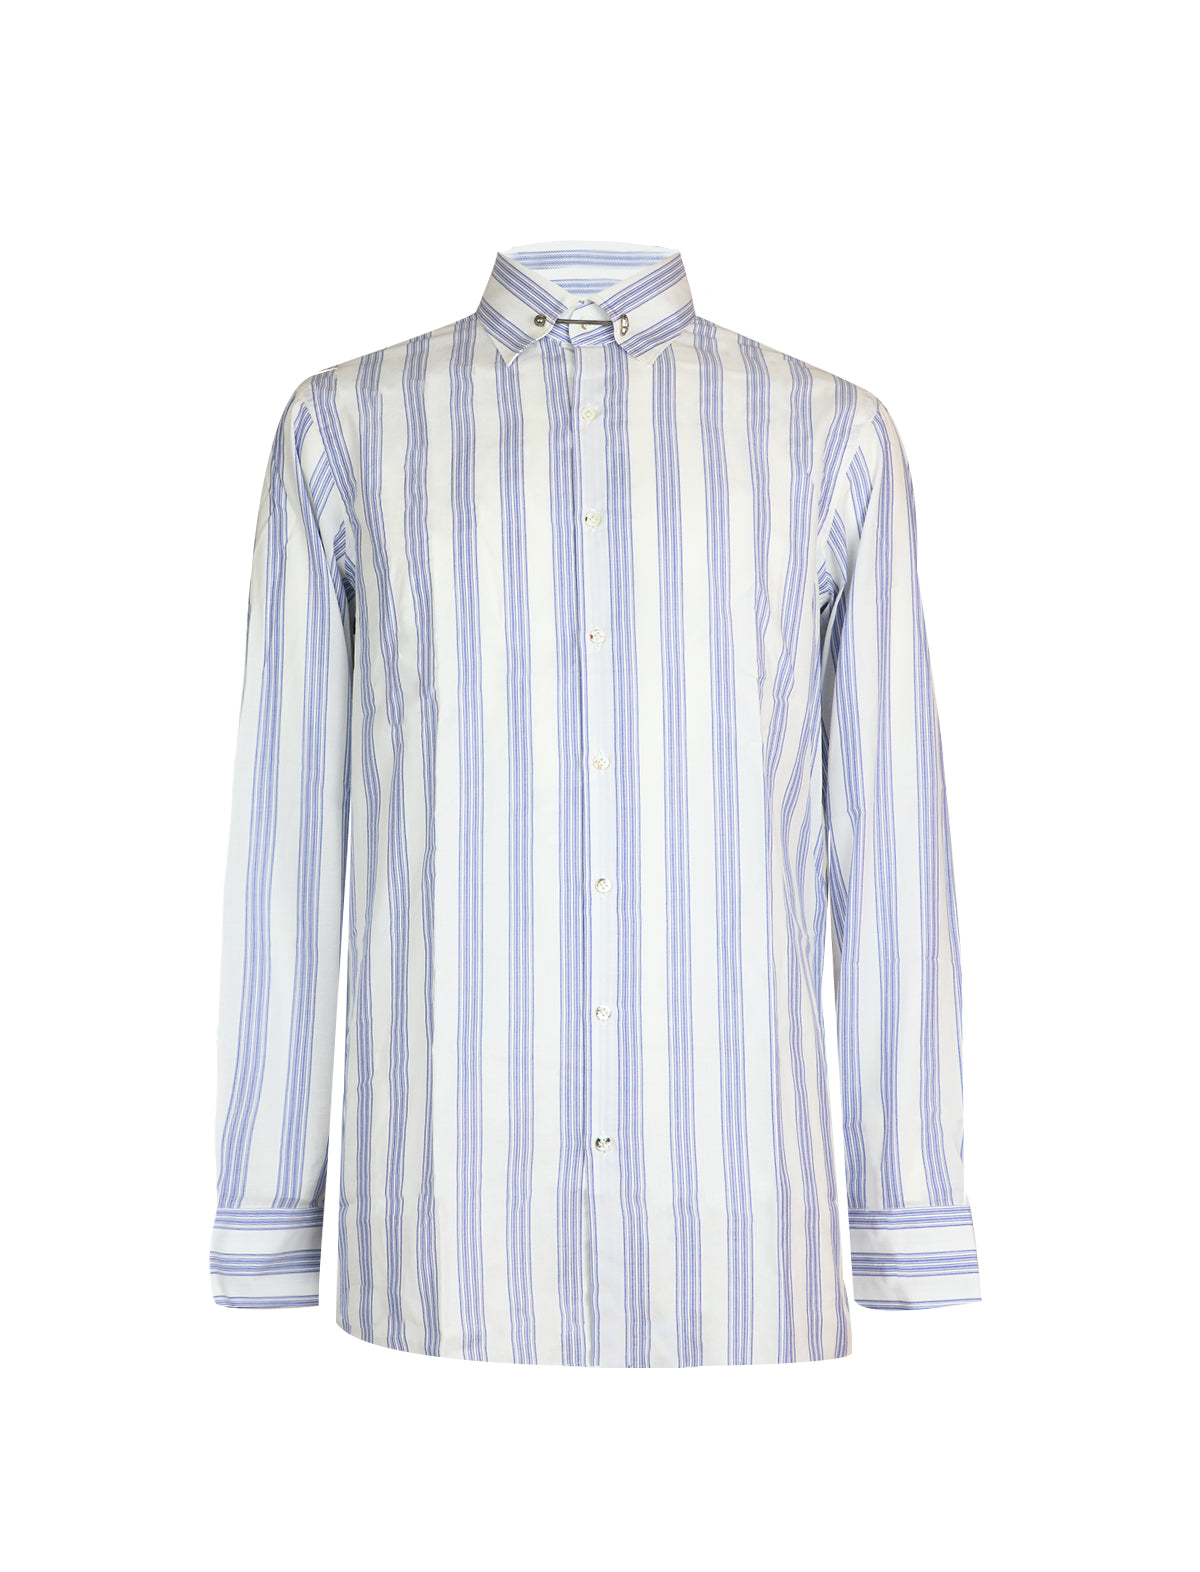 Gabriele Pasini Cotton-Blend Shirt in White/Blue Stripes